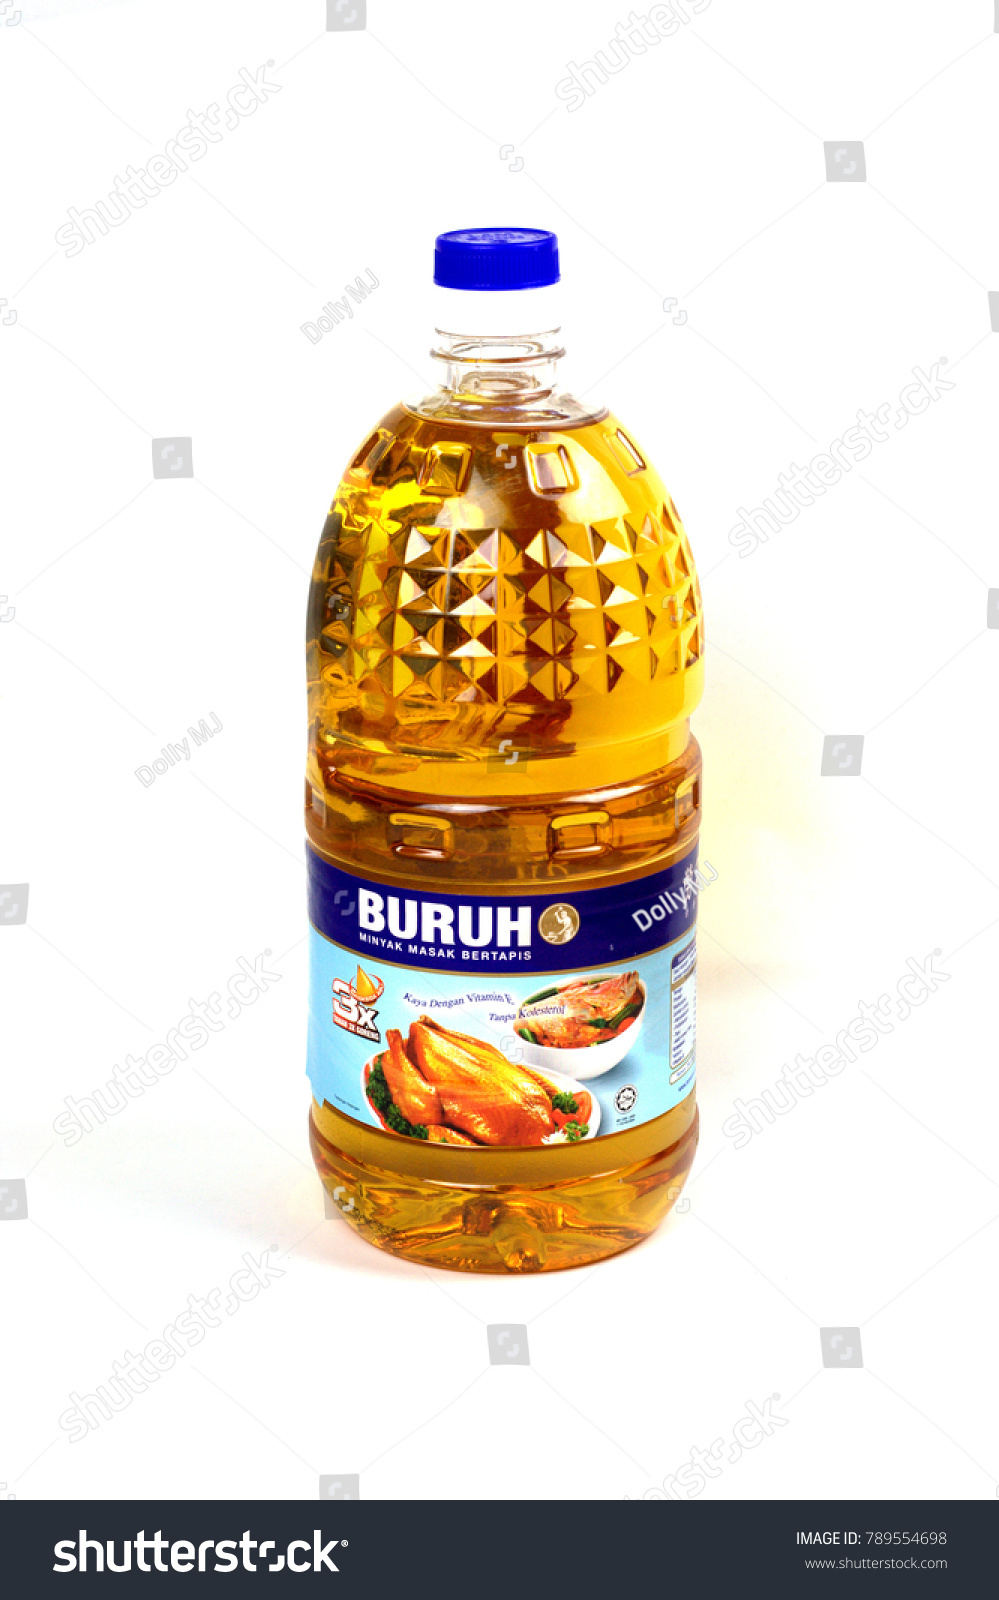 Oil buruh cooking Buruh Cooking